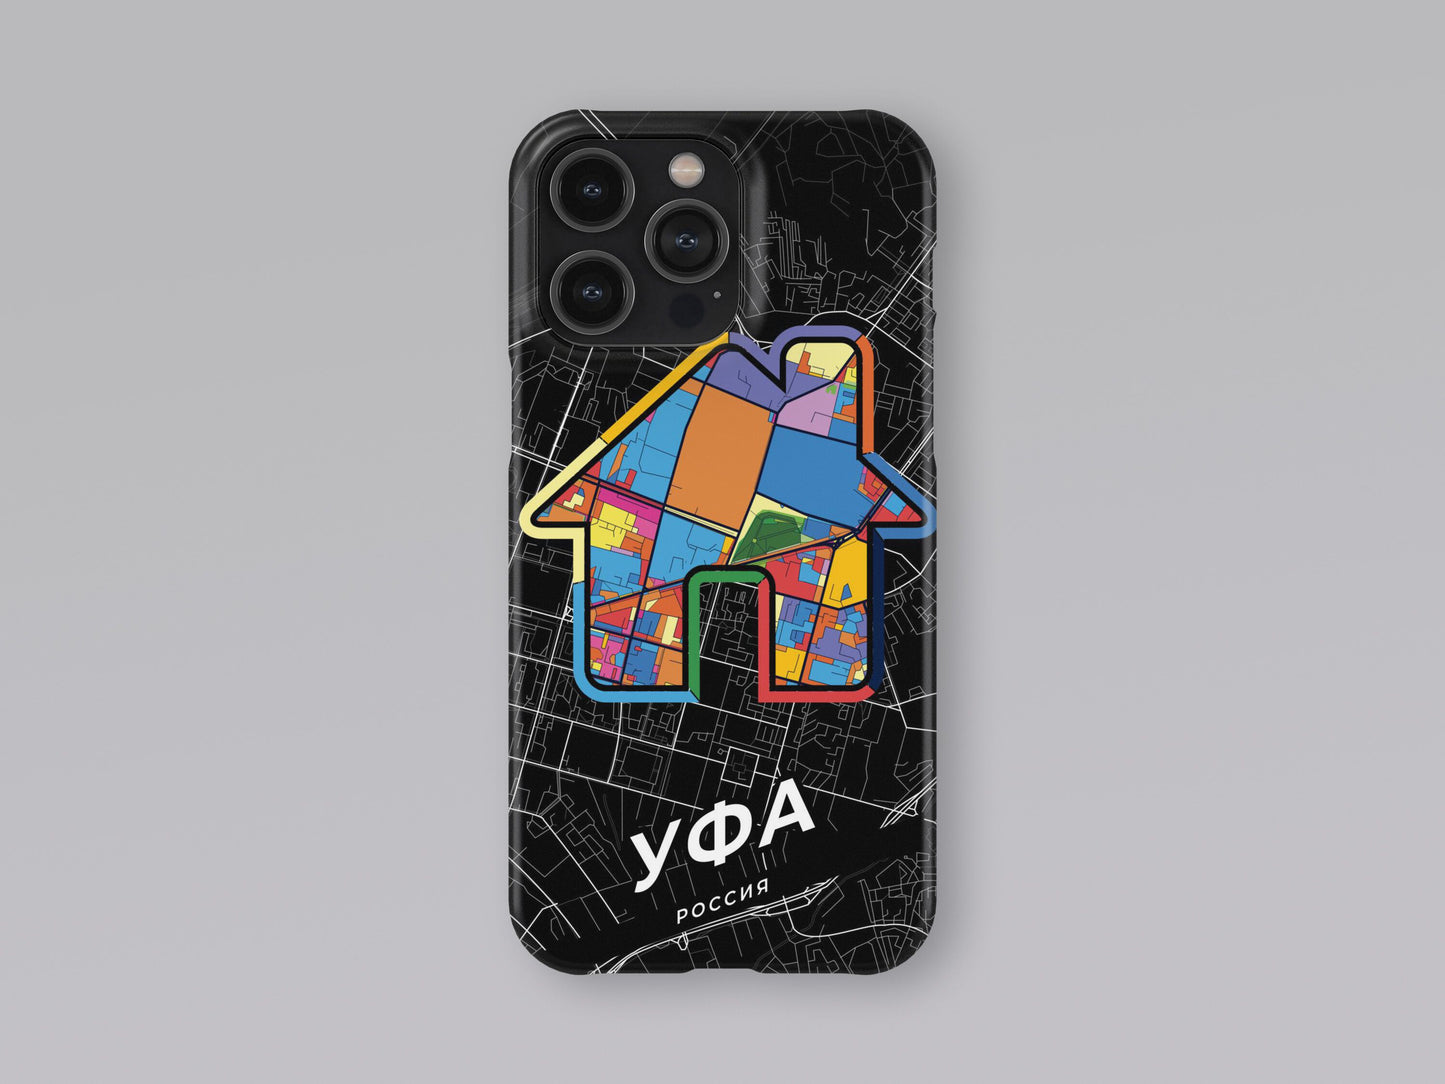 Ufa Russia slim phone case with colorful icon 3